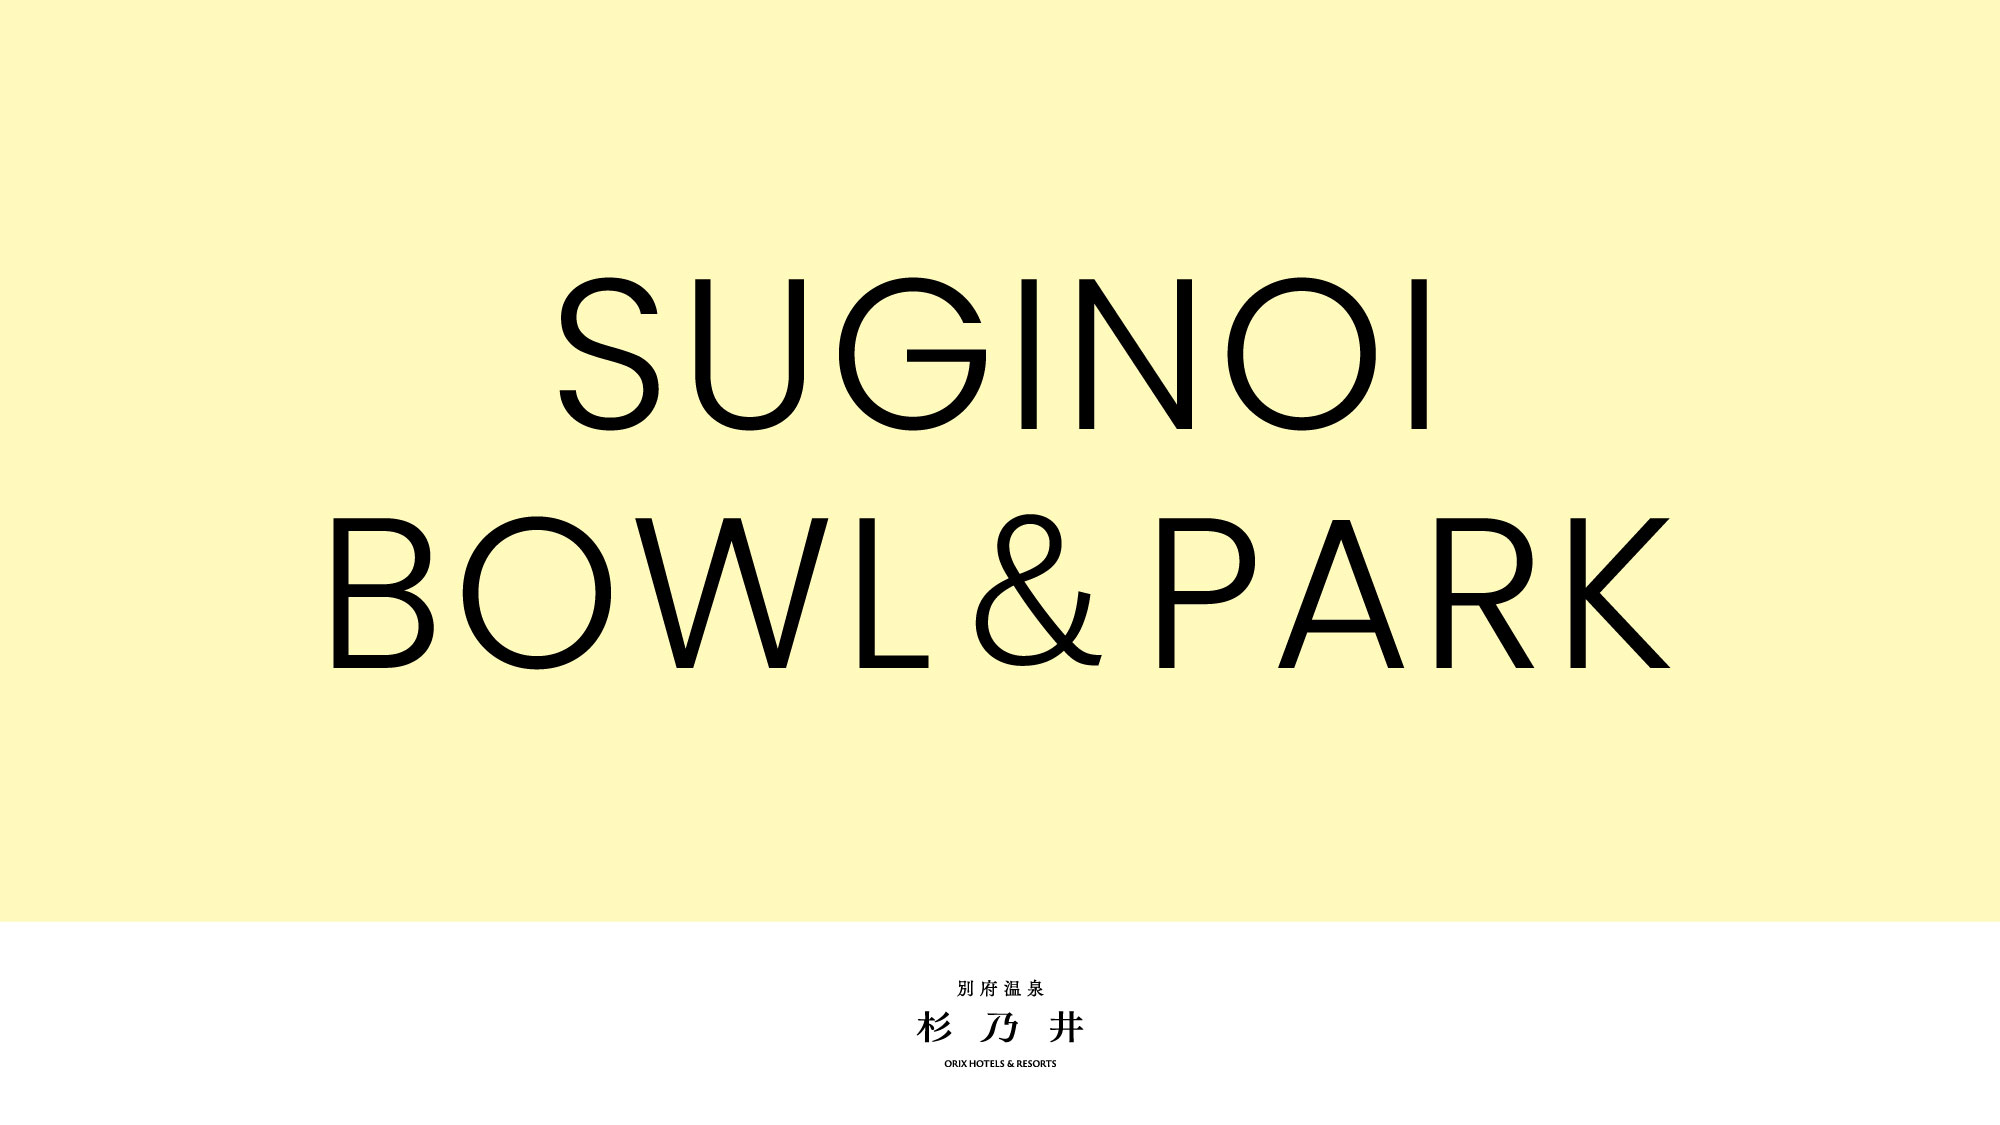 「SUGINOI BOWL & PARK」